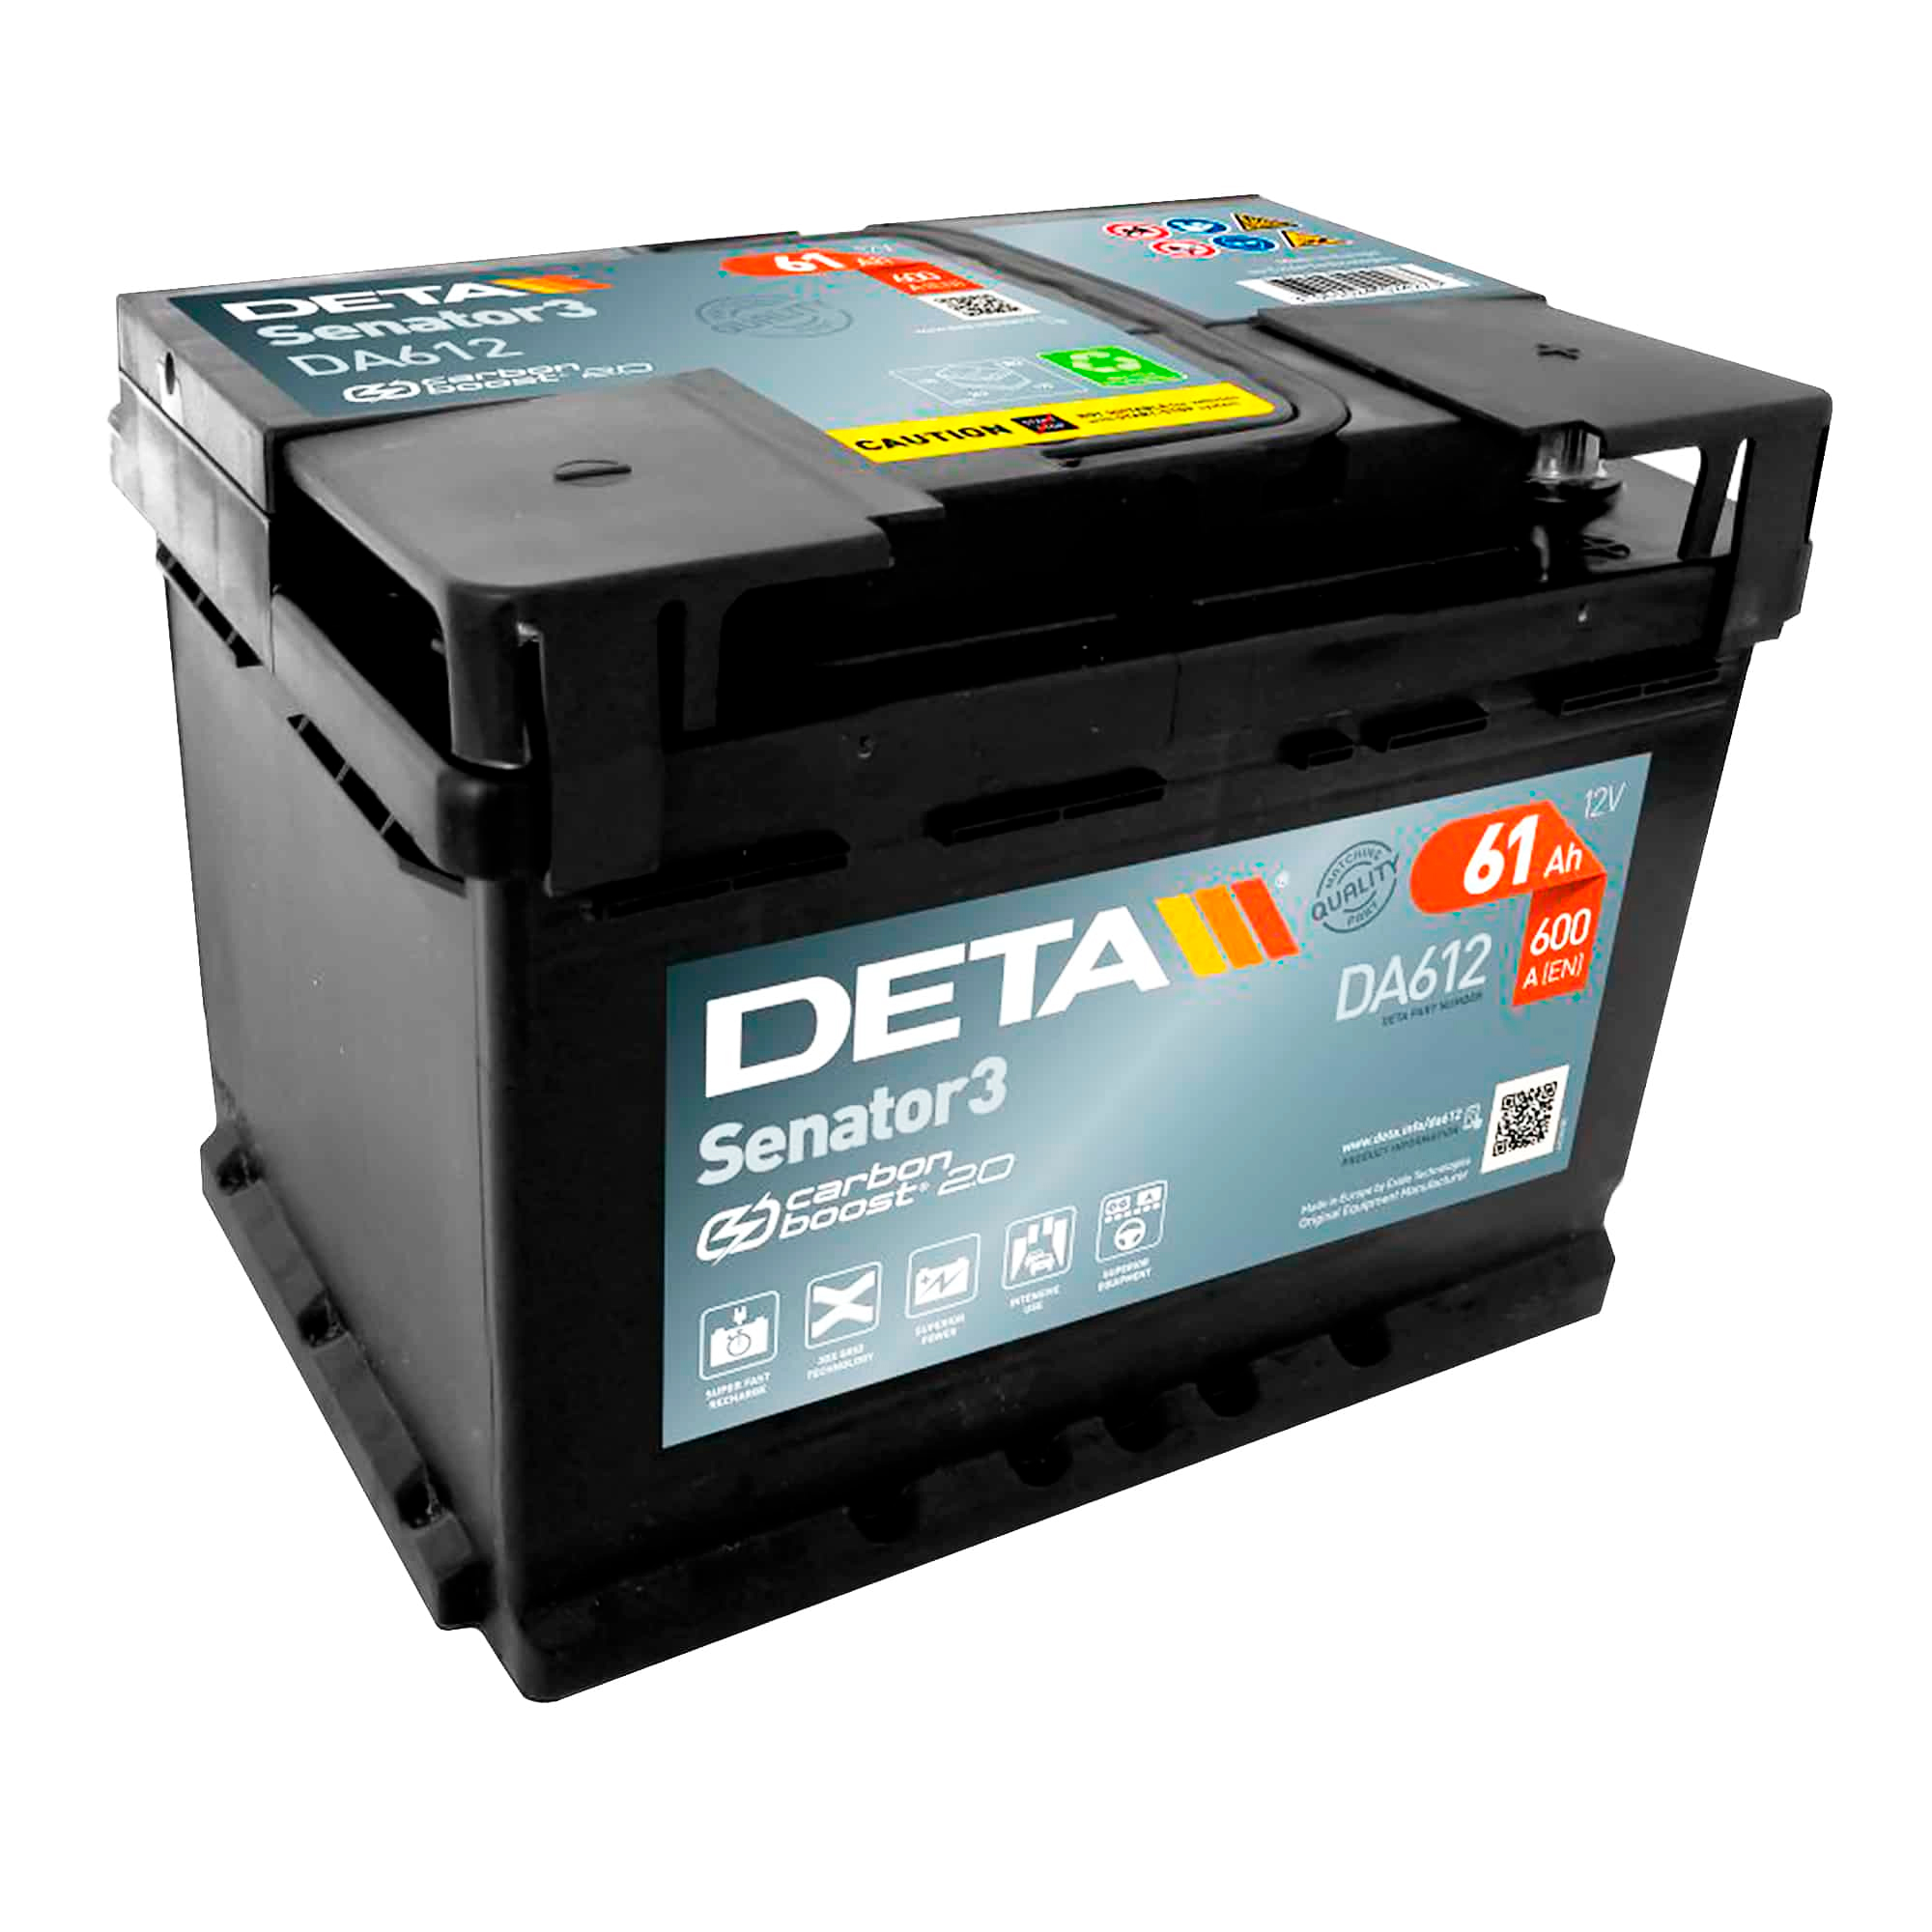 Аккумулятор DETA Senator 3 6CT-61Ah (-/+) (DA612)